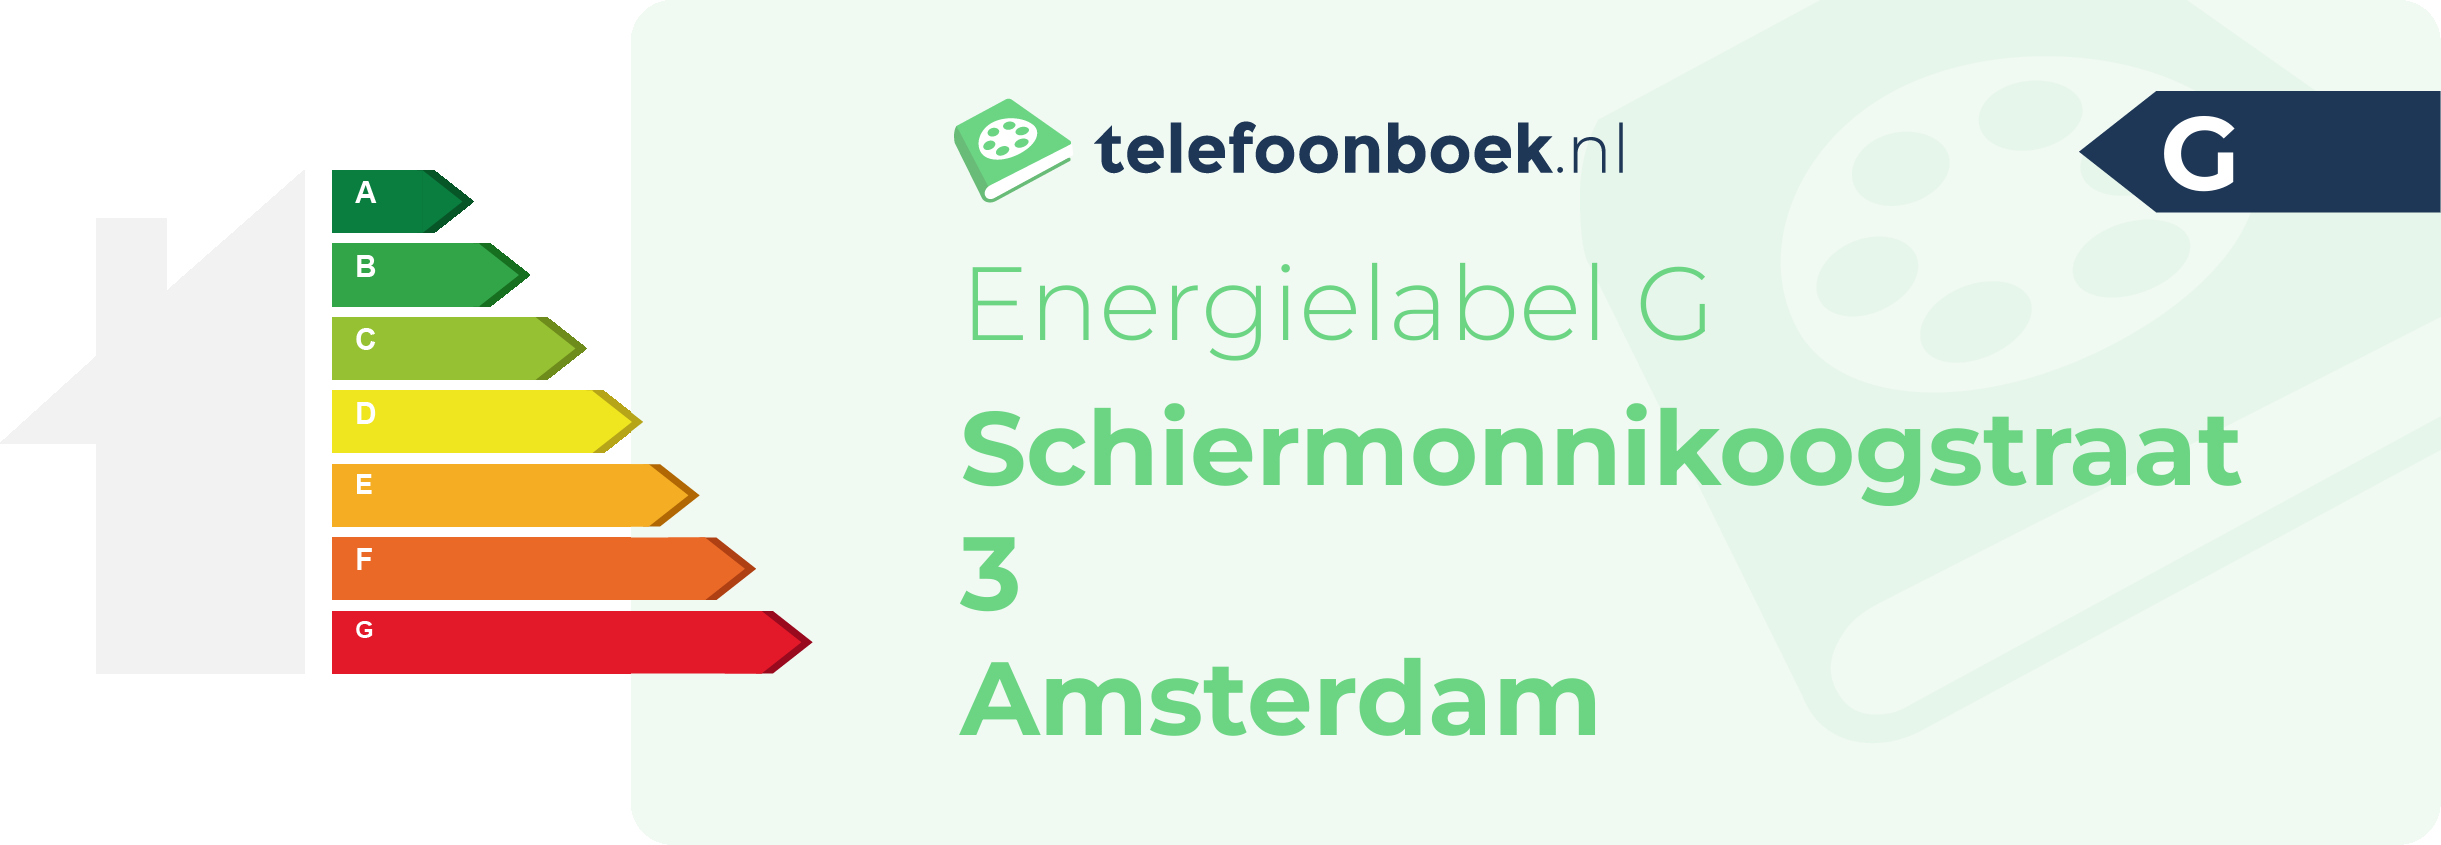 Energielabel Schiermonnikoogstraat 3 Amsterdam